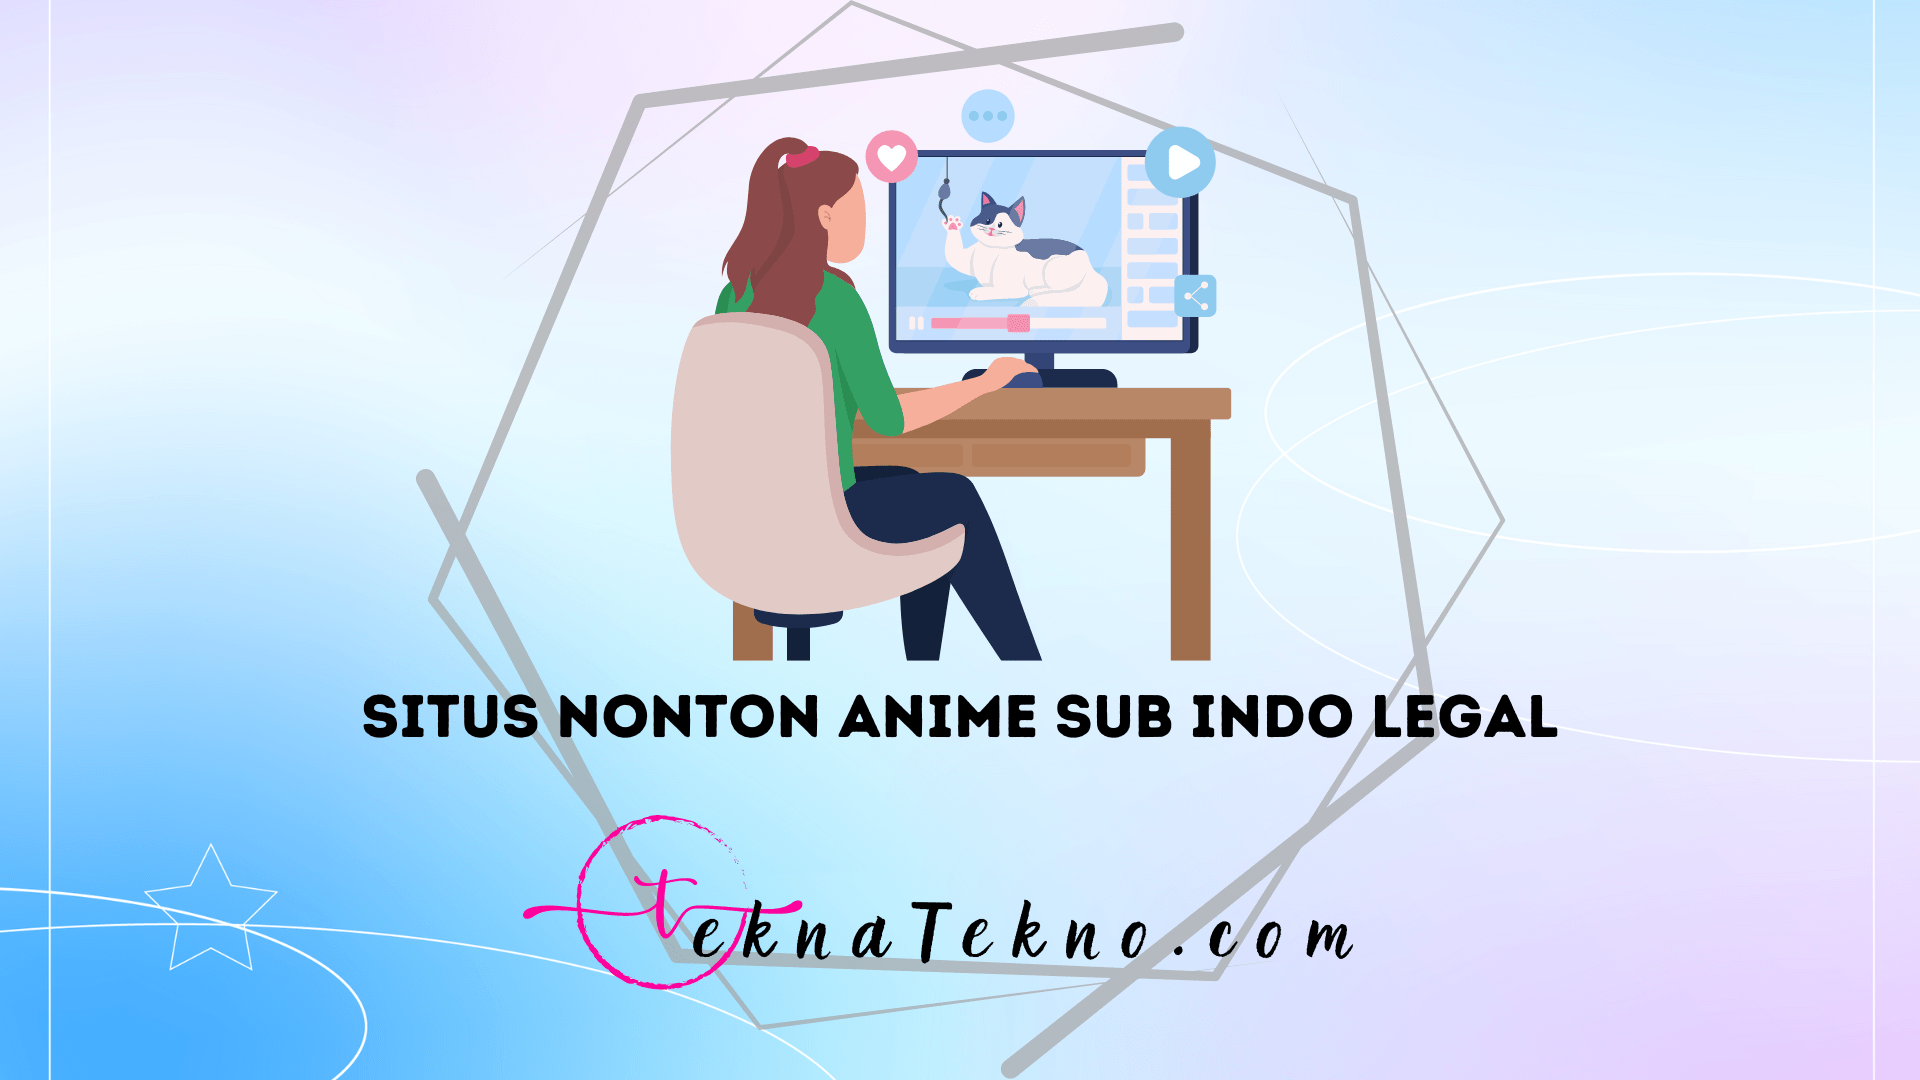 7 Situs Nonton Anime Sub Indonesia Terbaik, Legal dan Gratis